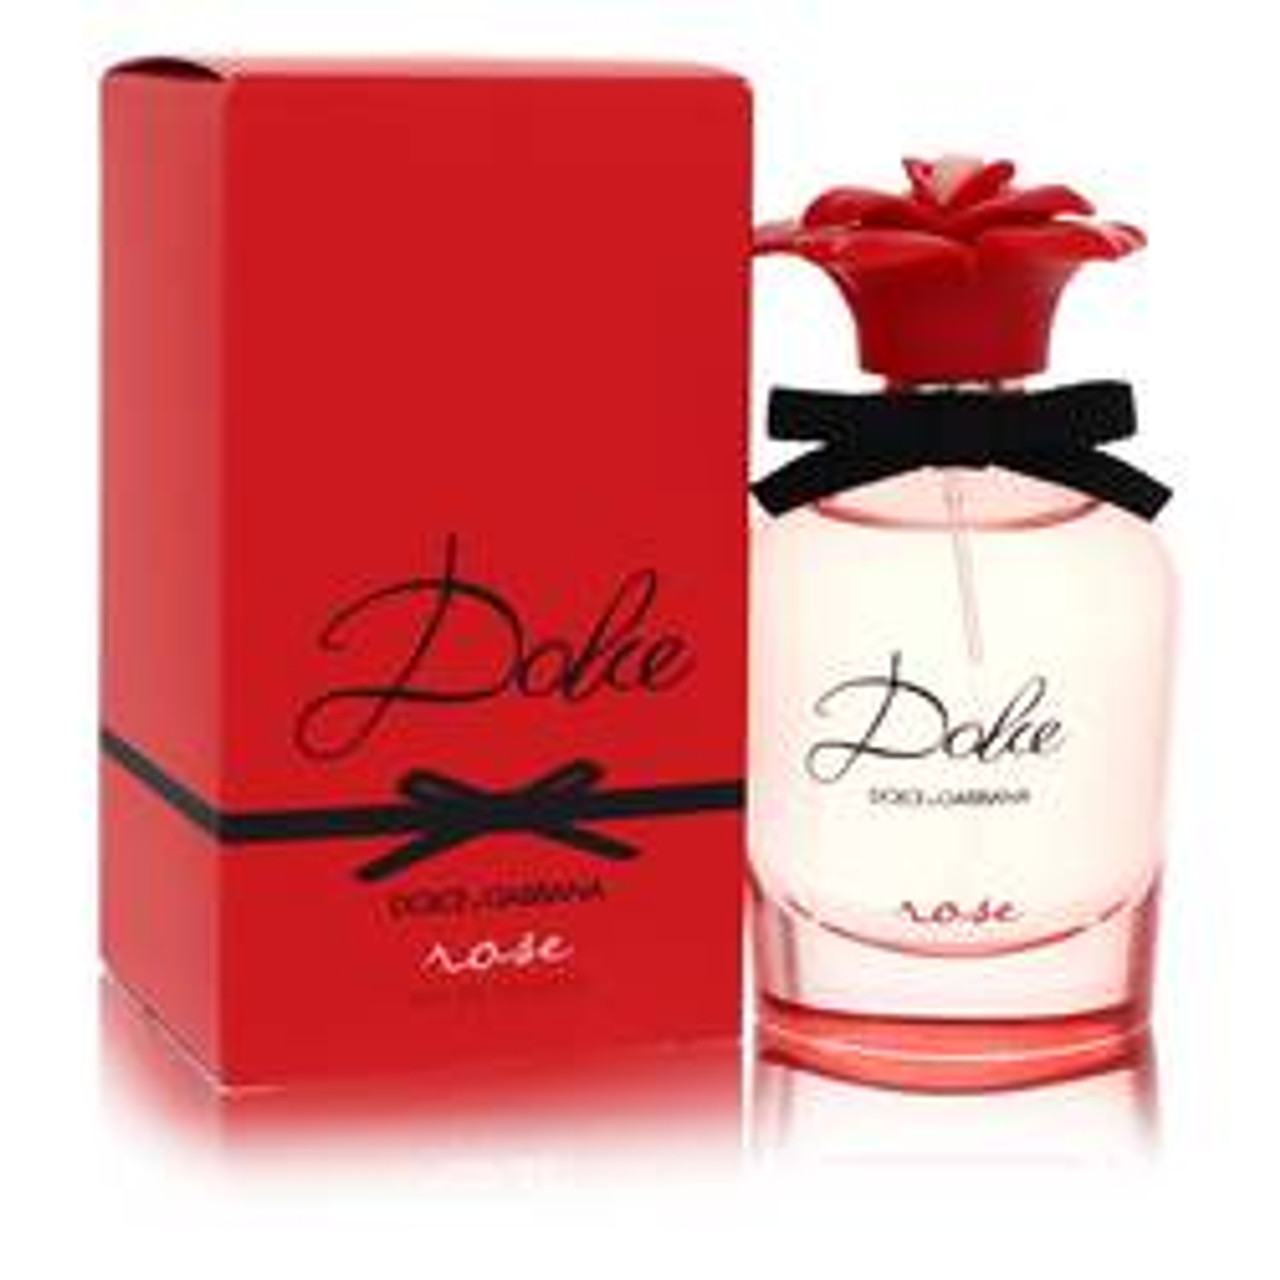 Dolce Rose Perfume By Dolce & Gabbana Eau De Toilette Spray 1.6 oz for Women - *Pre-Order